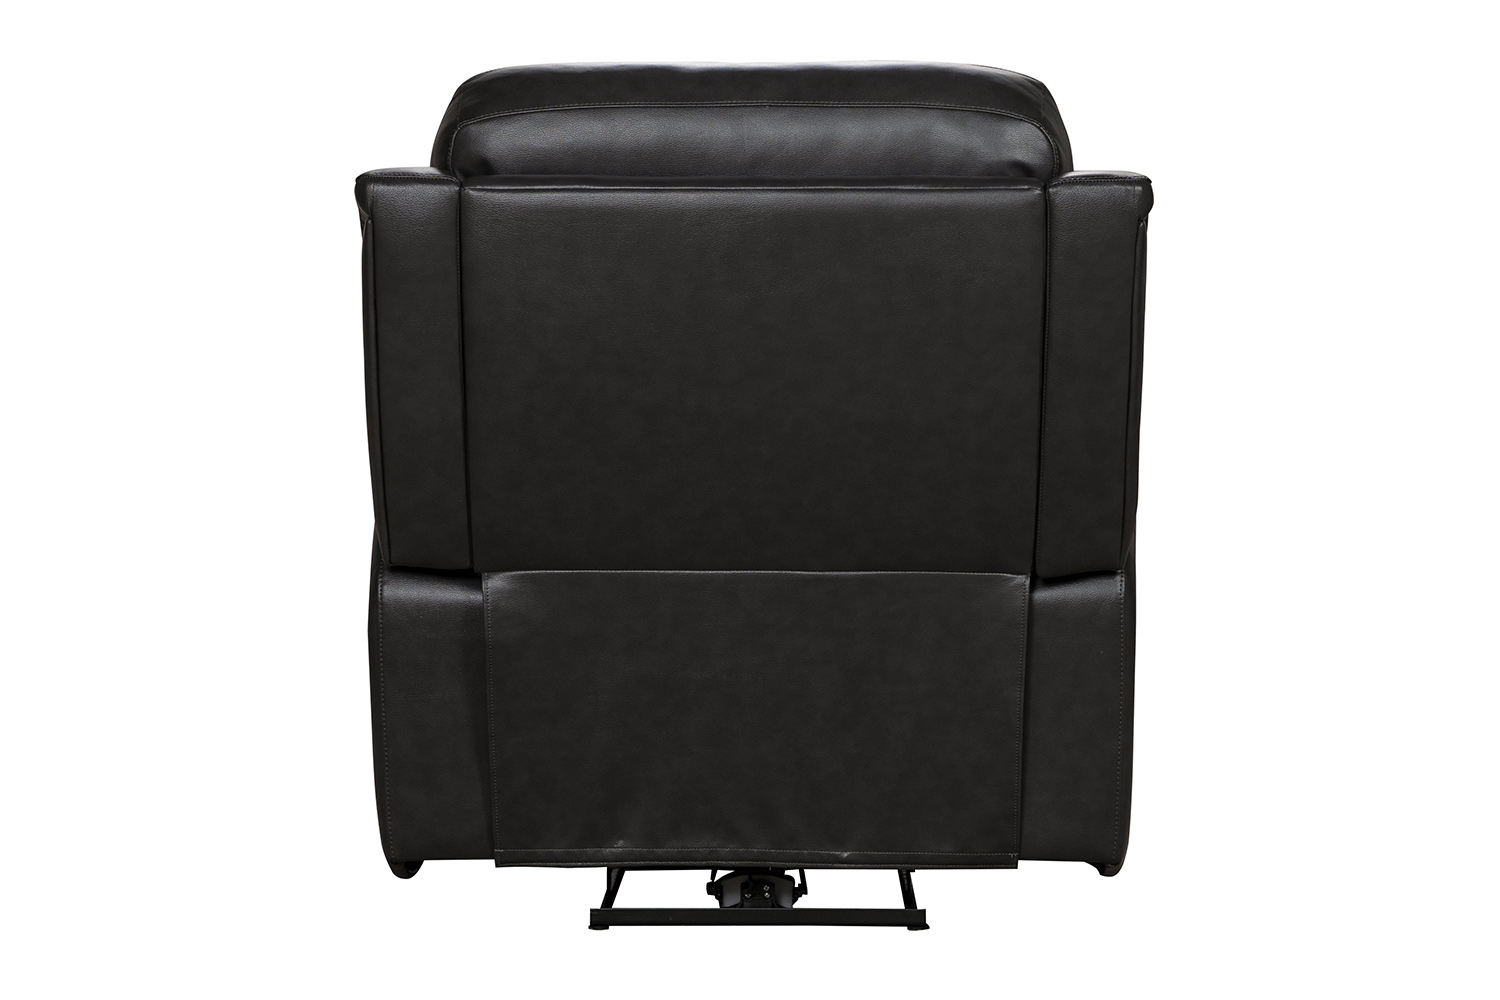 Barcalounger Burbank Power Recliner Chair with Power Head Rest and Lumbar - Matteo Smokey Gray/Leather match